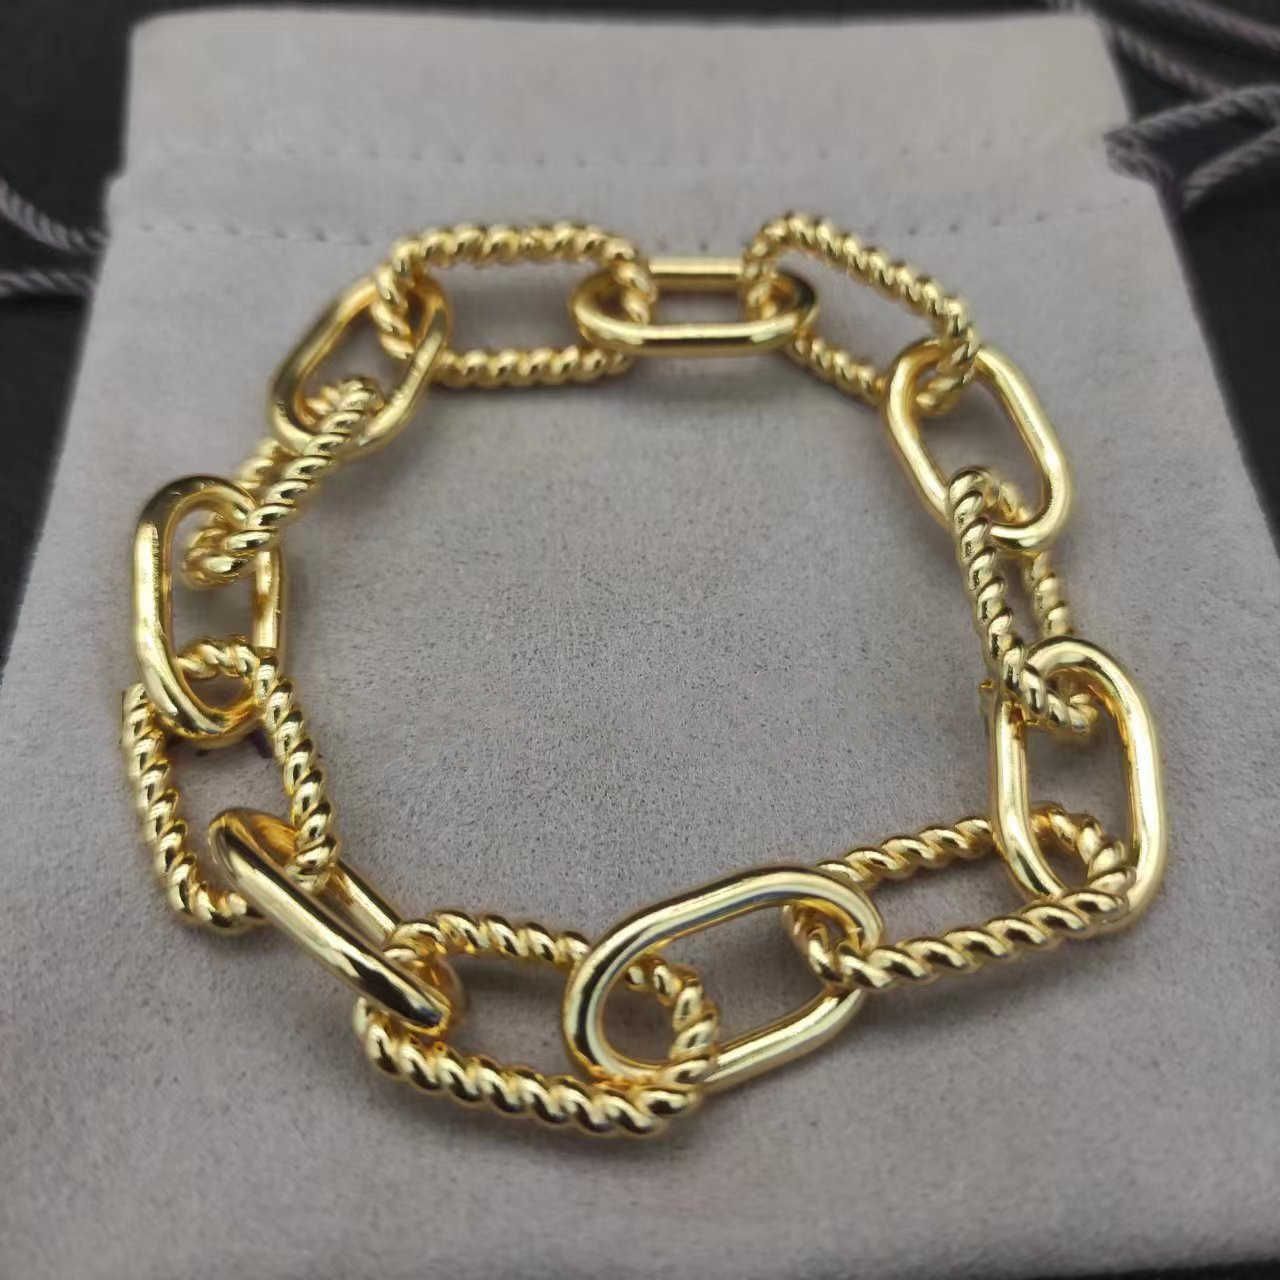 10 gold bracelet-21cm